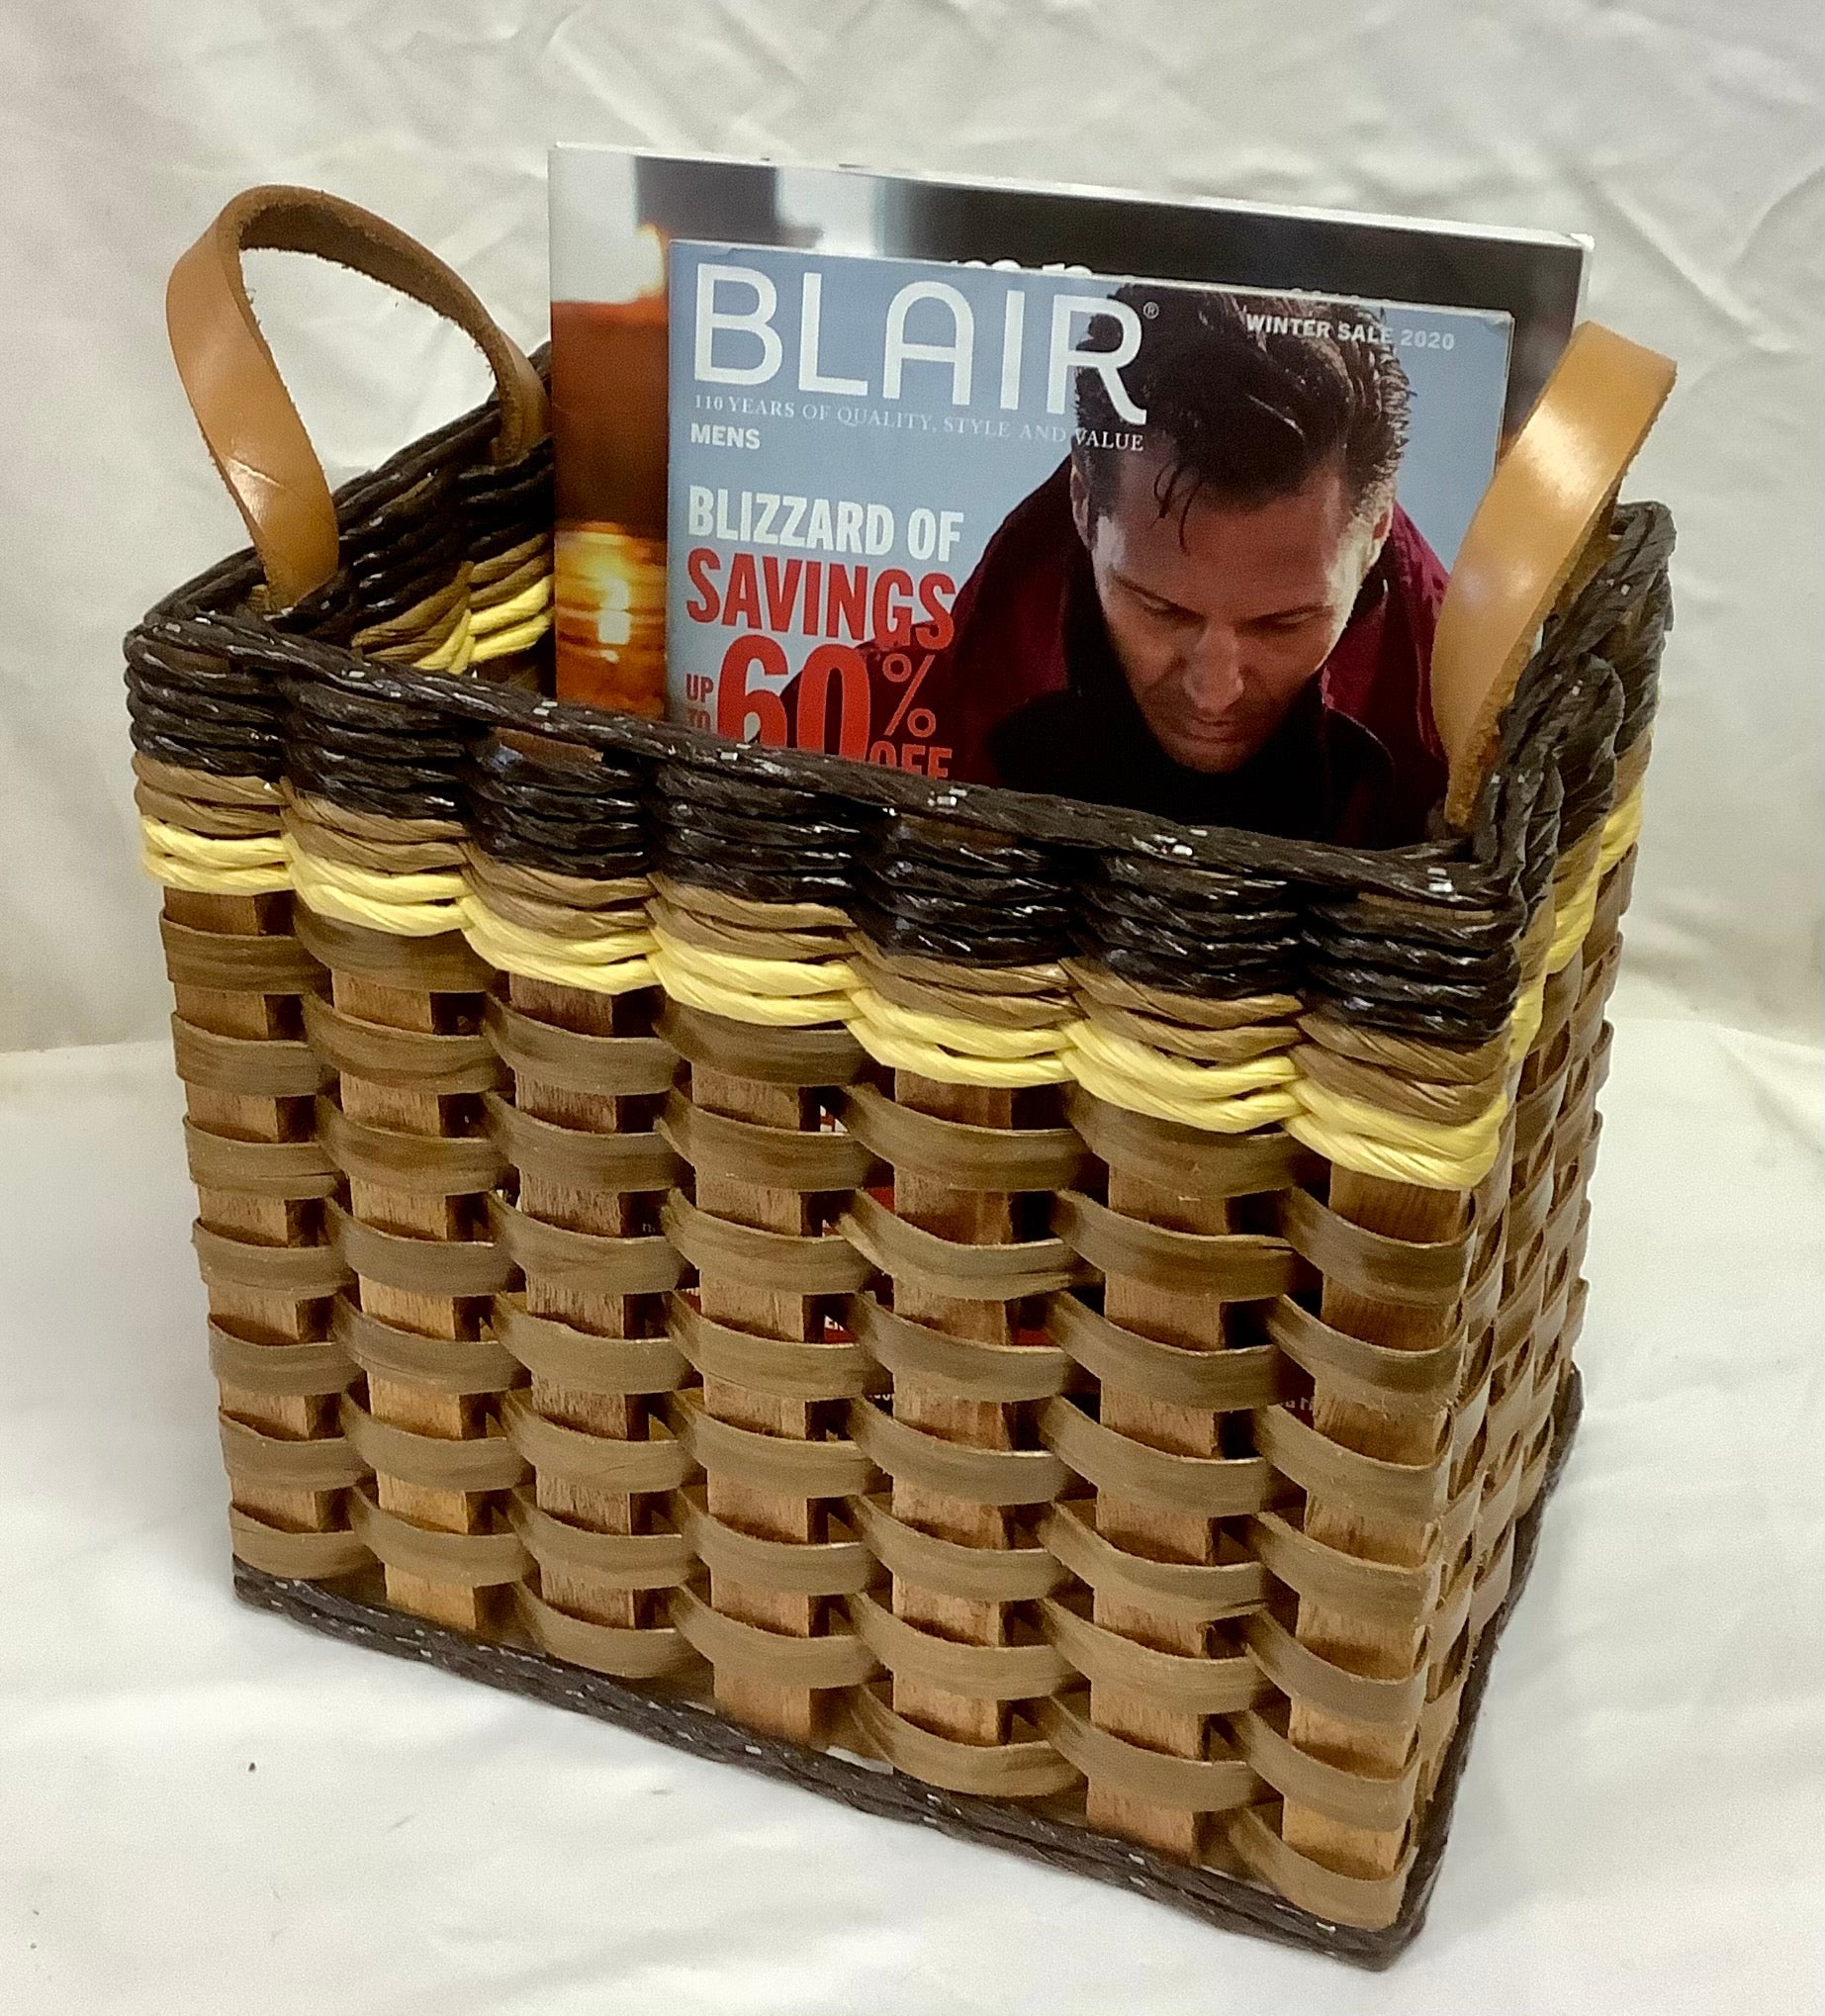 Bathroom Magazine Holder Basket – Foxcreek Baskets